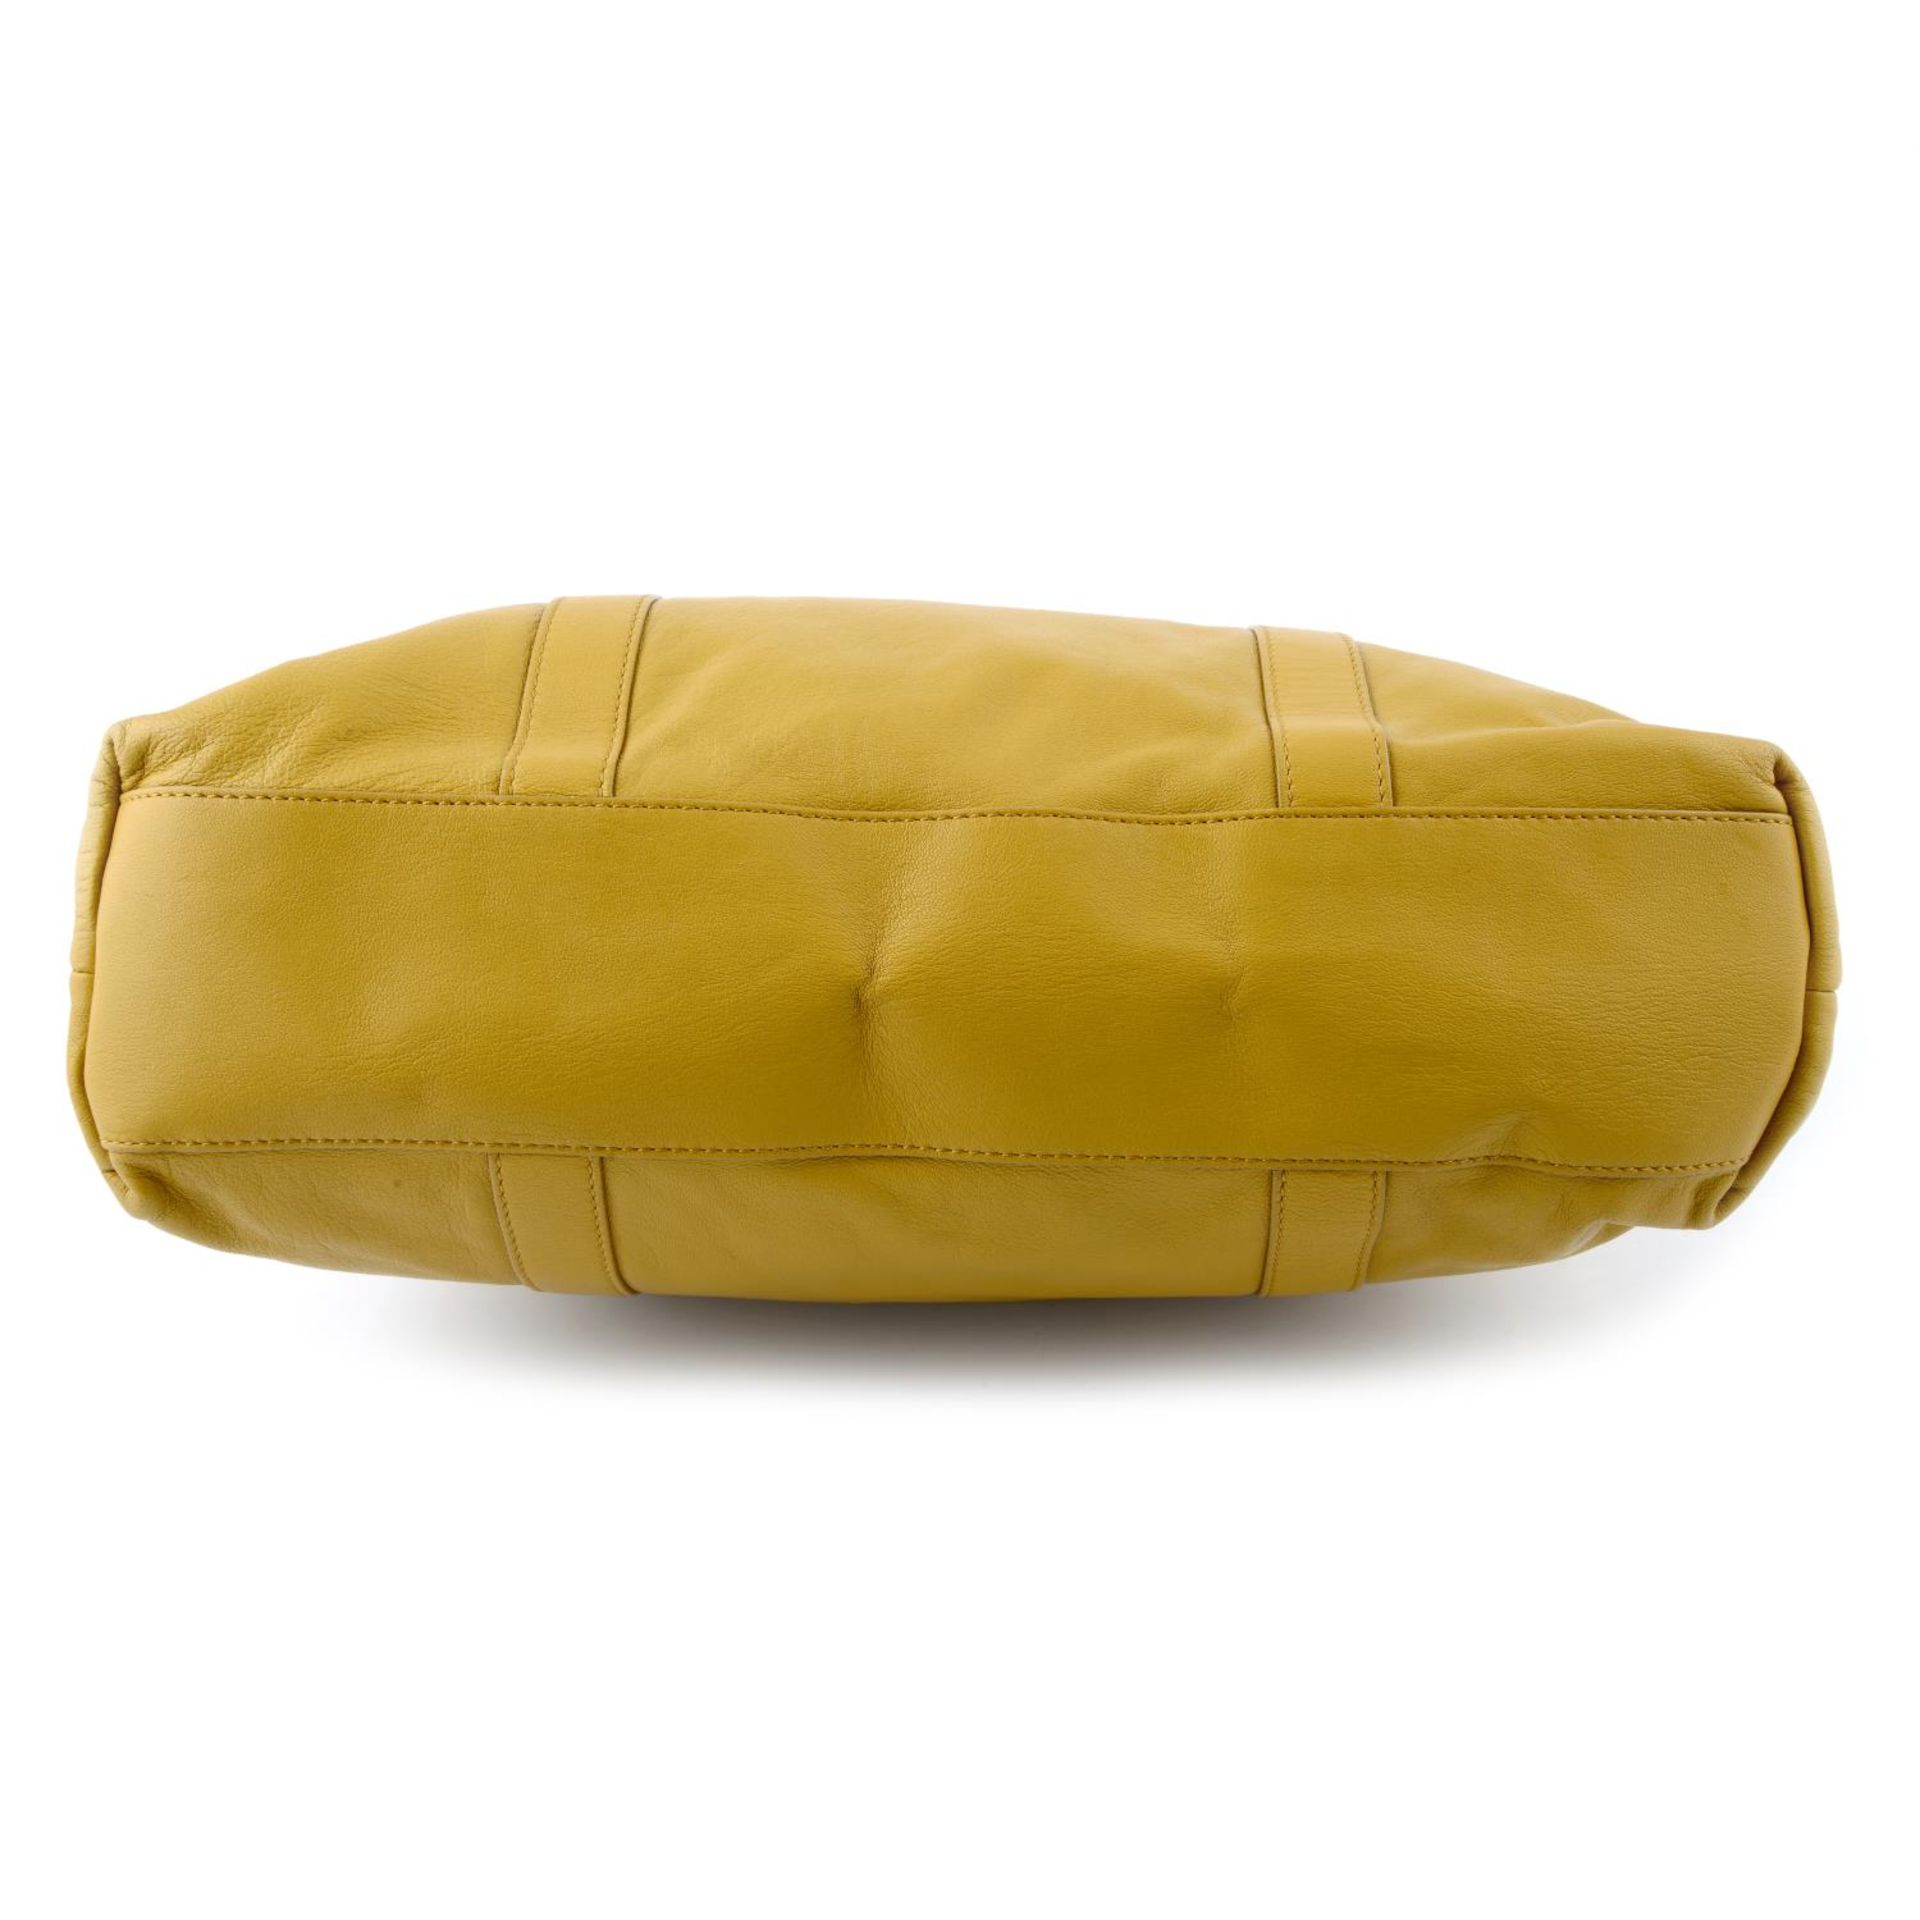 DOLCE & GABBANA - a mustard yellow leather handbag. - Image 4 of 4